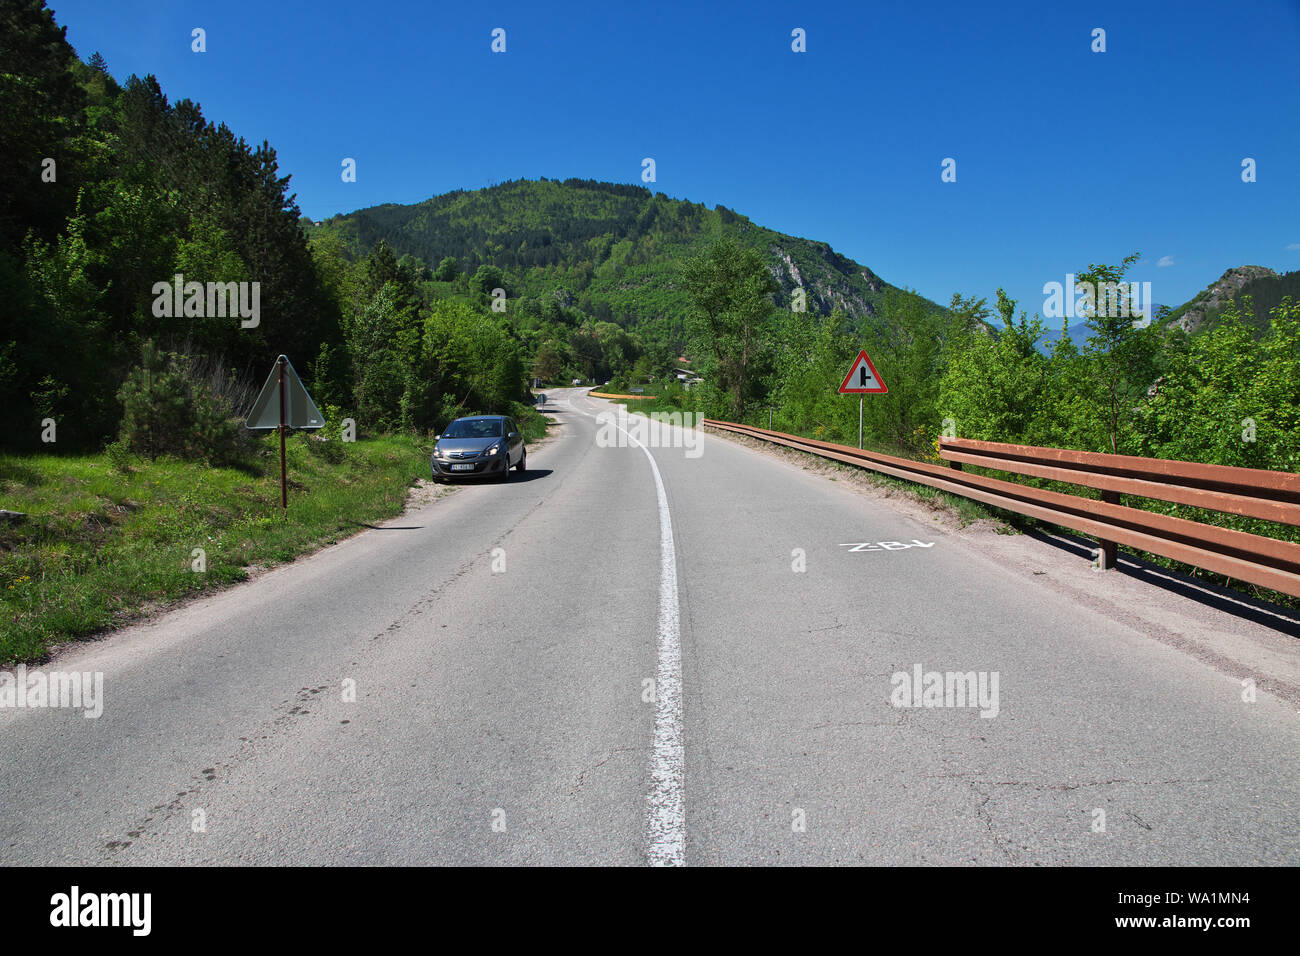 Sarajevo / Bosina and Herzegovina - 27 Apr 2018: The road on green mountains of Bosnia and Herzegovina Stock Photo